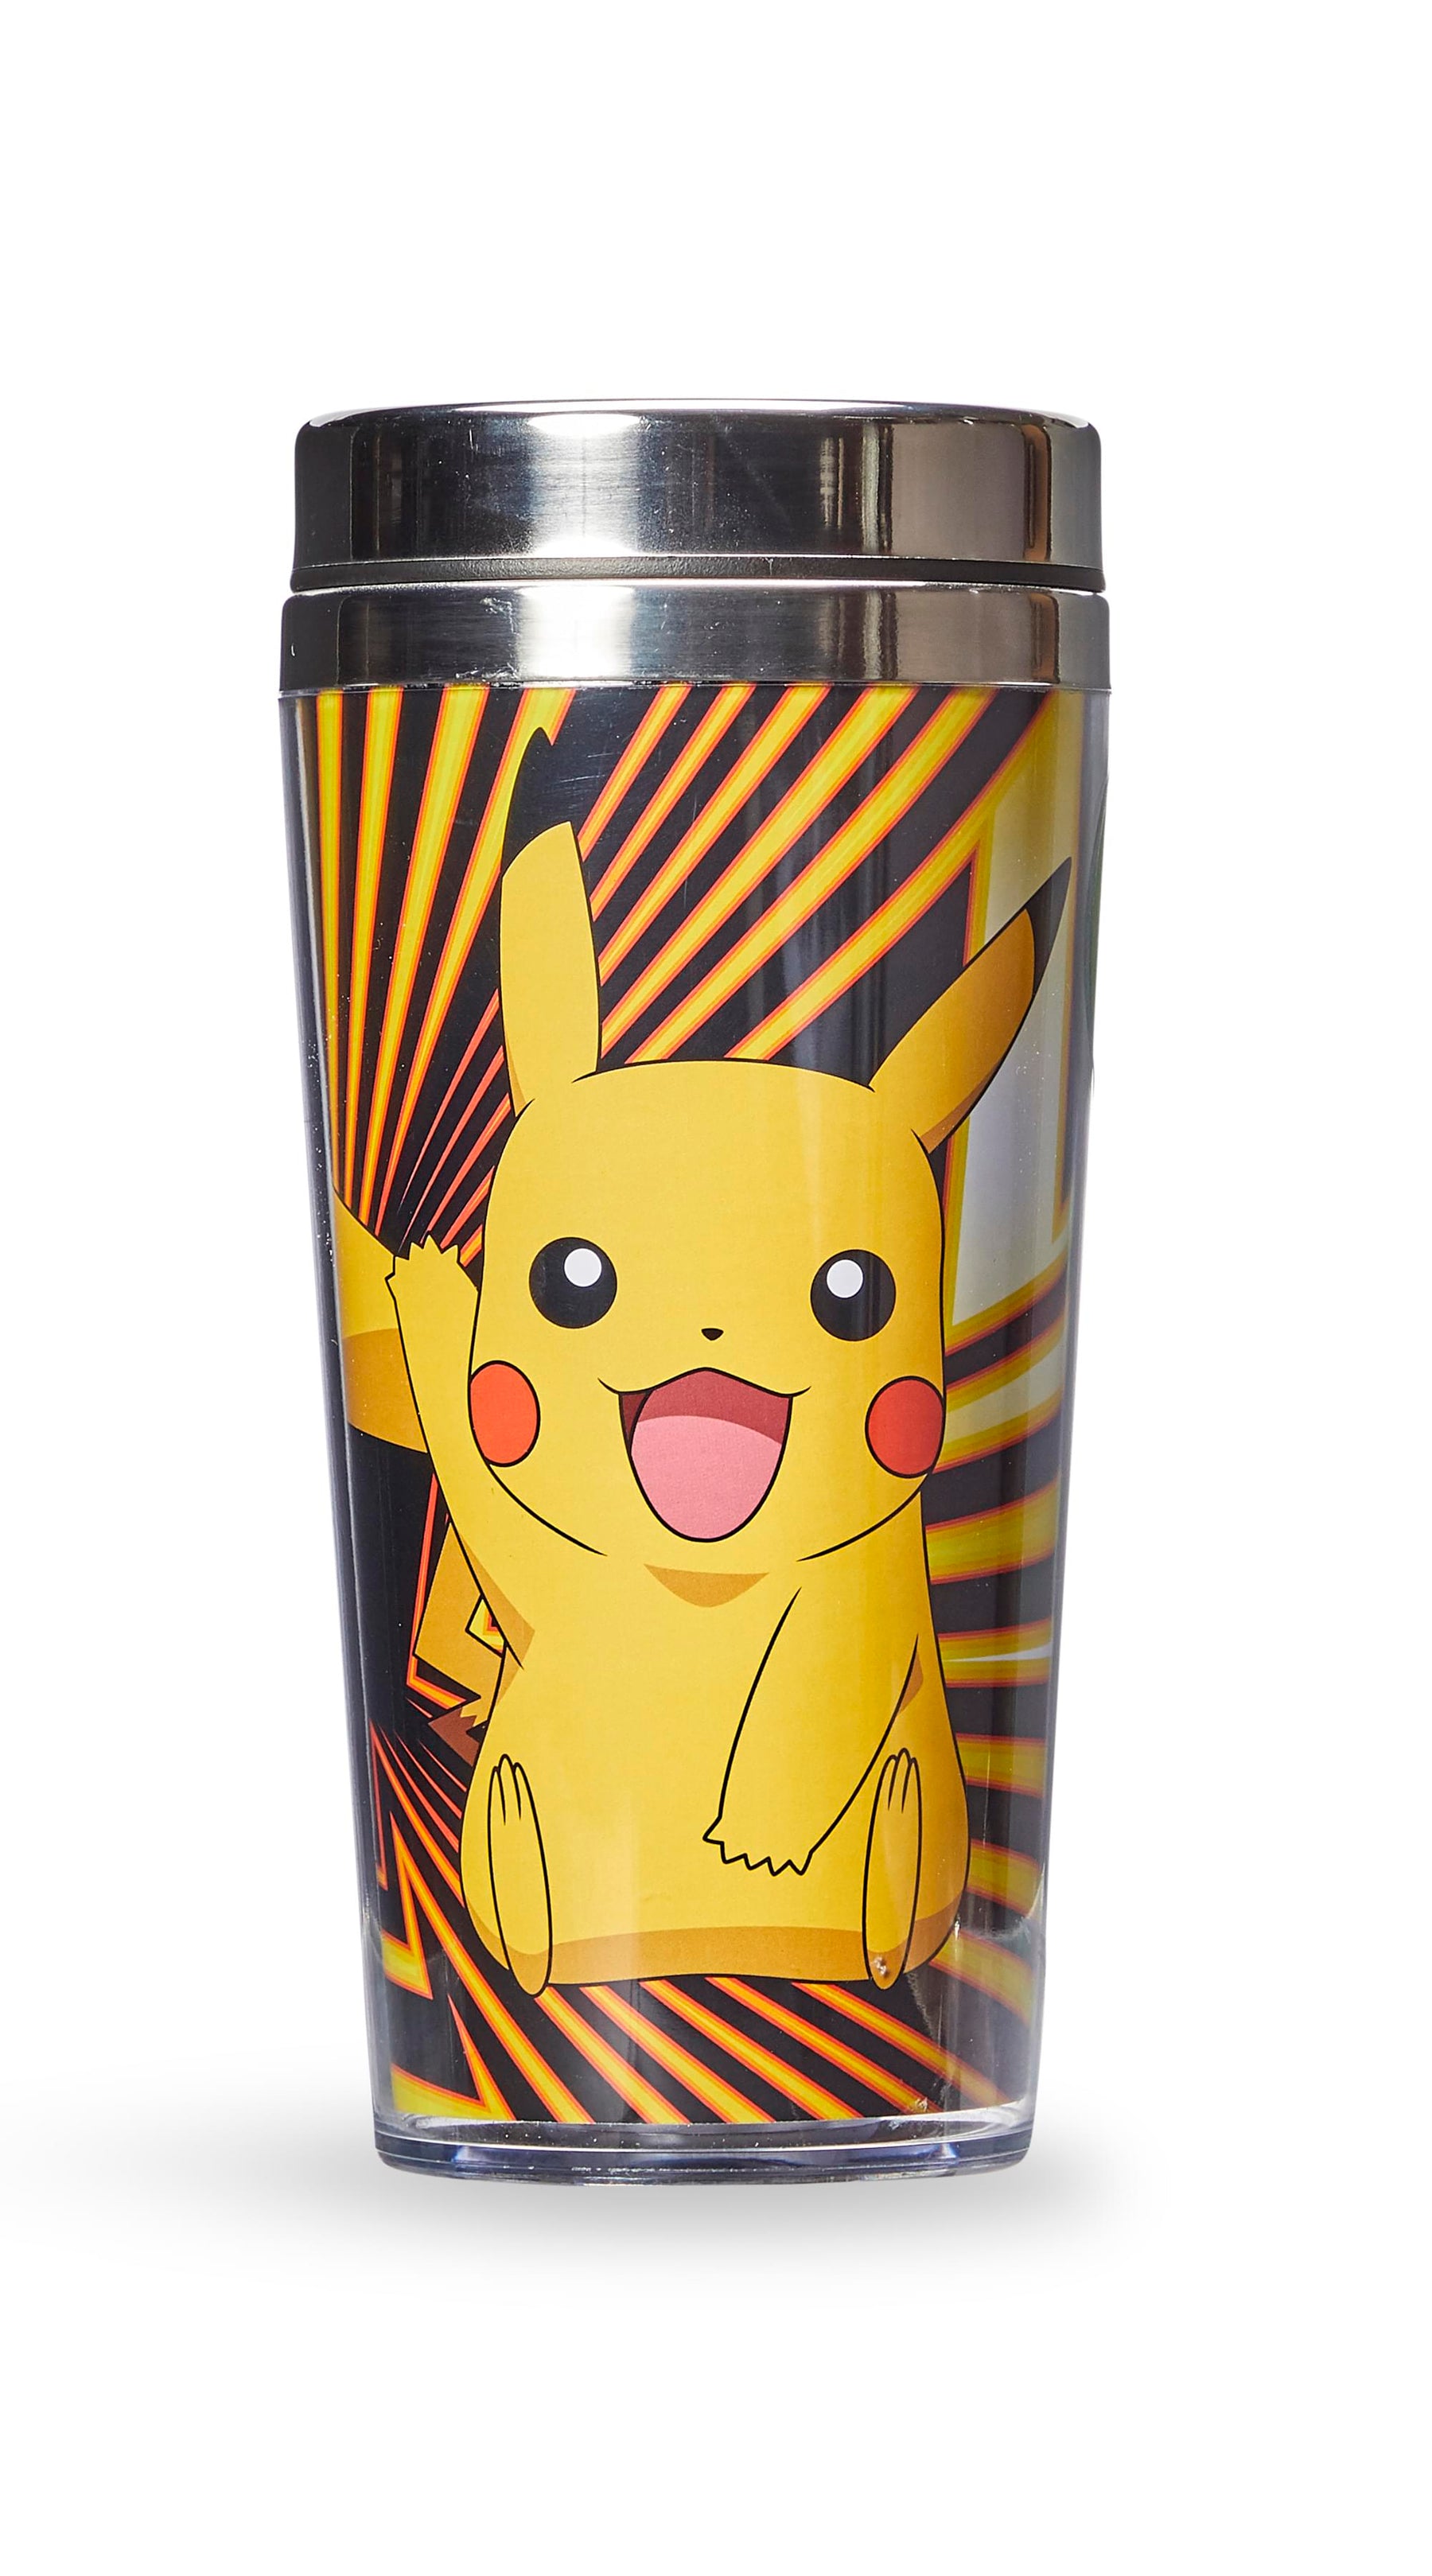 Pokemon Pikachu Travel Mug - 16oz BPA-Free Car Tumbler with Spill-Proof Lid